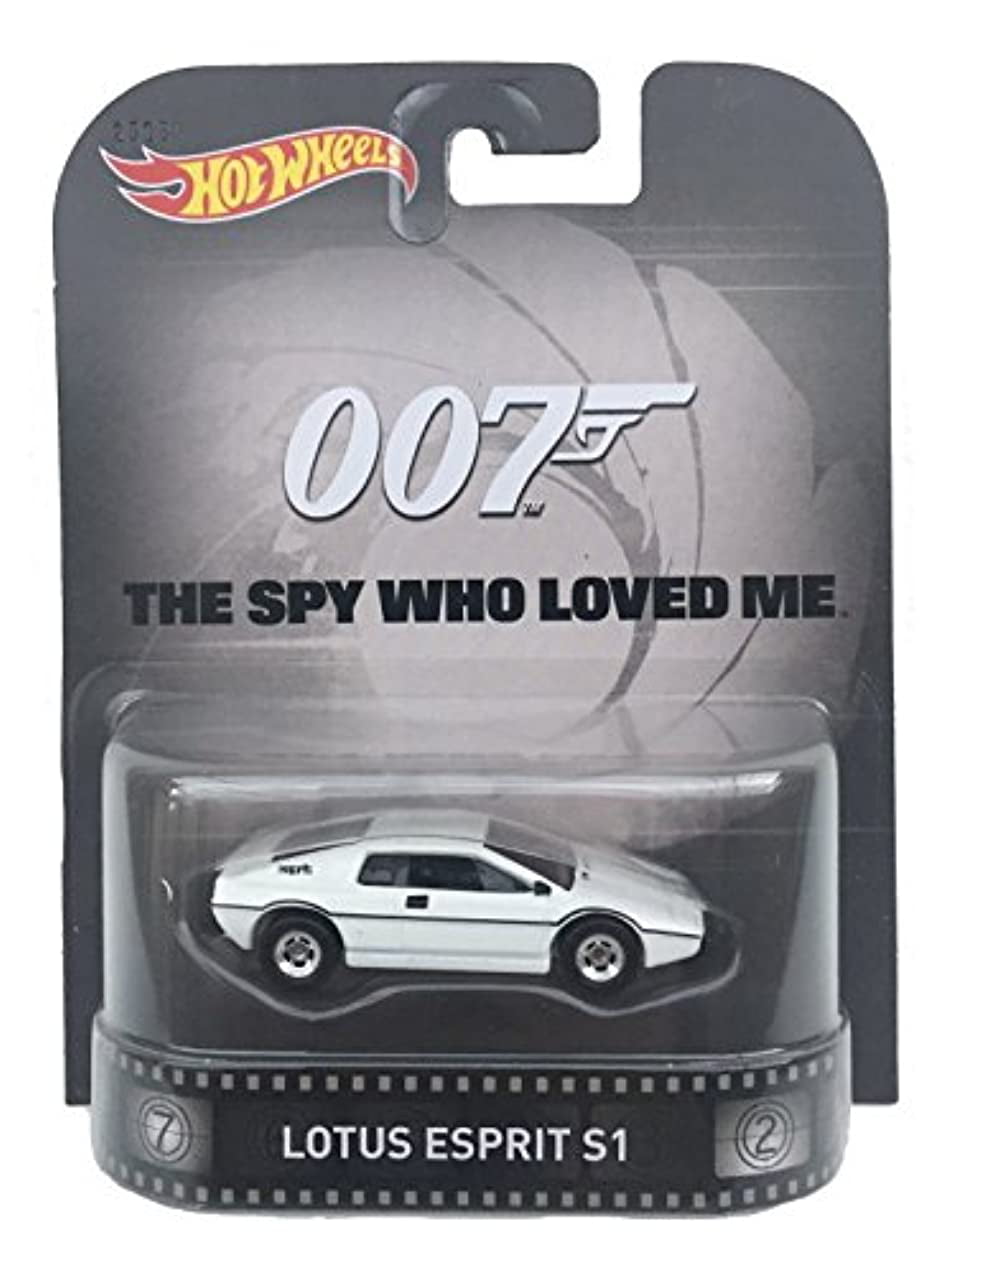 James Bond HOTWHEELS LOTUS ESPRIT S1 THE SPY WHO LOVED ME 1:64 